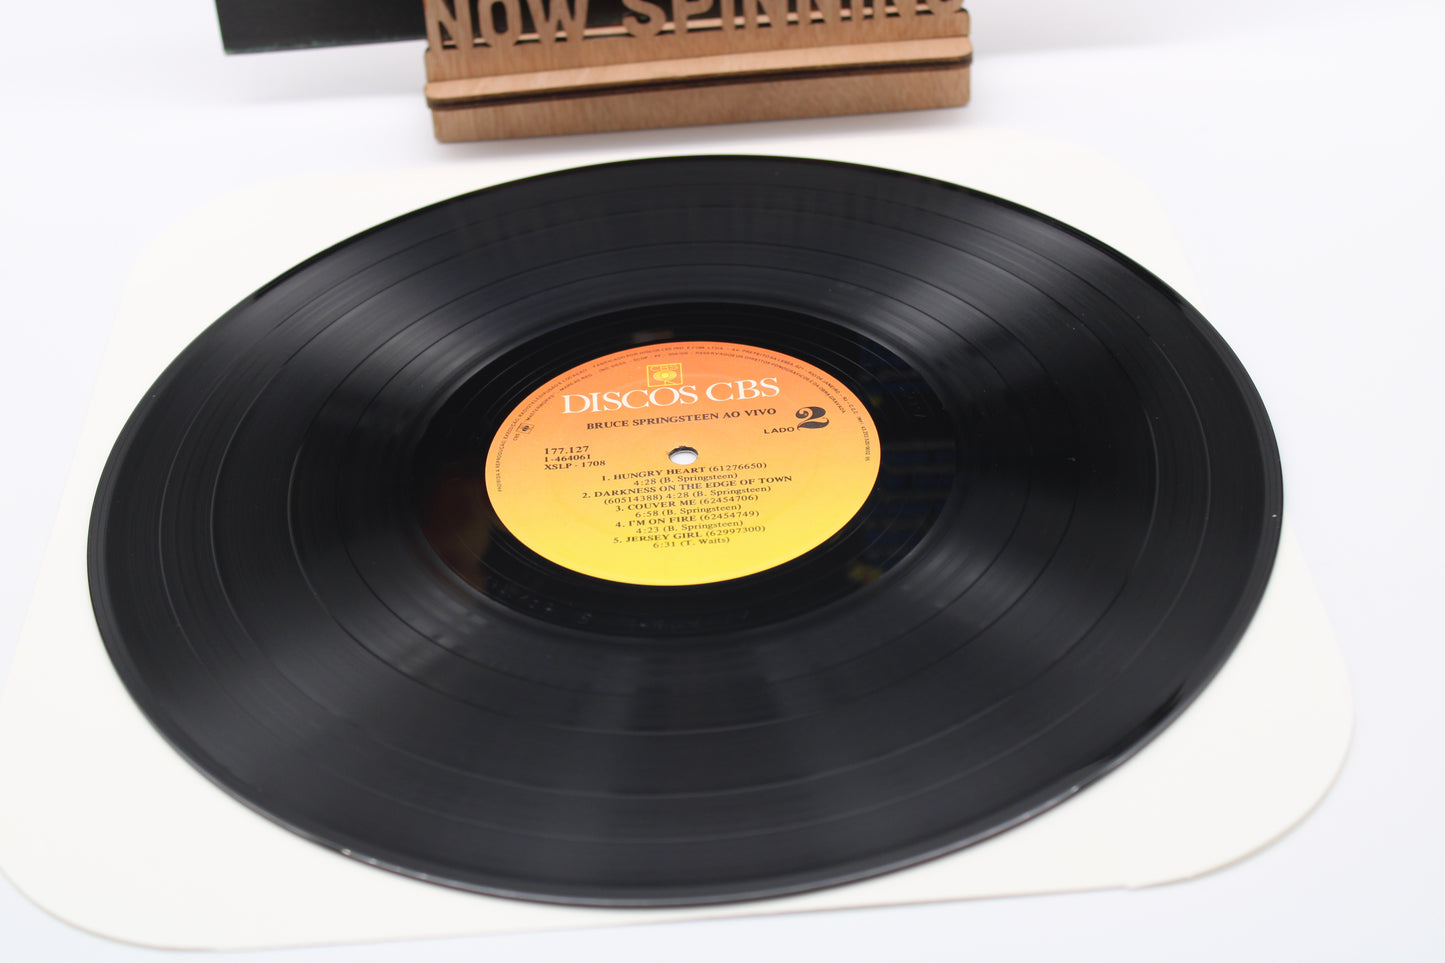 Bruce Springsteen Vinyl - Ao Vivo - CBS Records, 1989 Brazil import compilation on 12" Vinyl